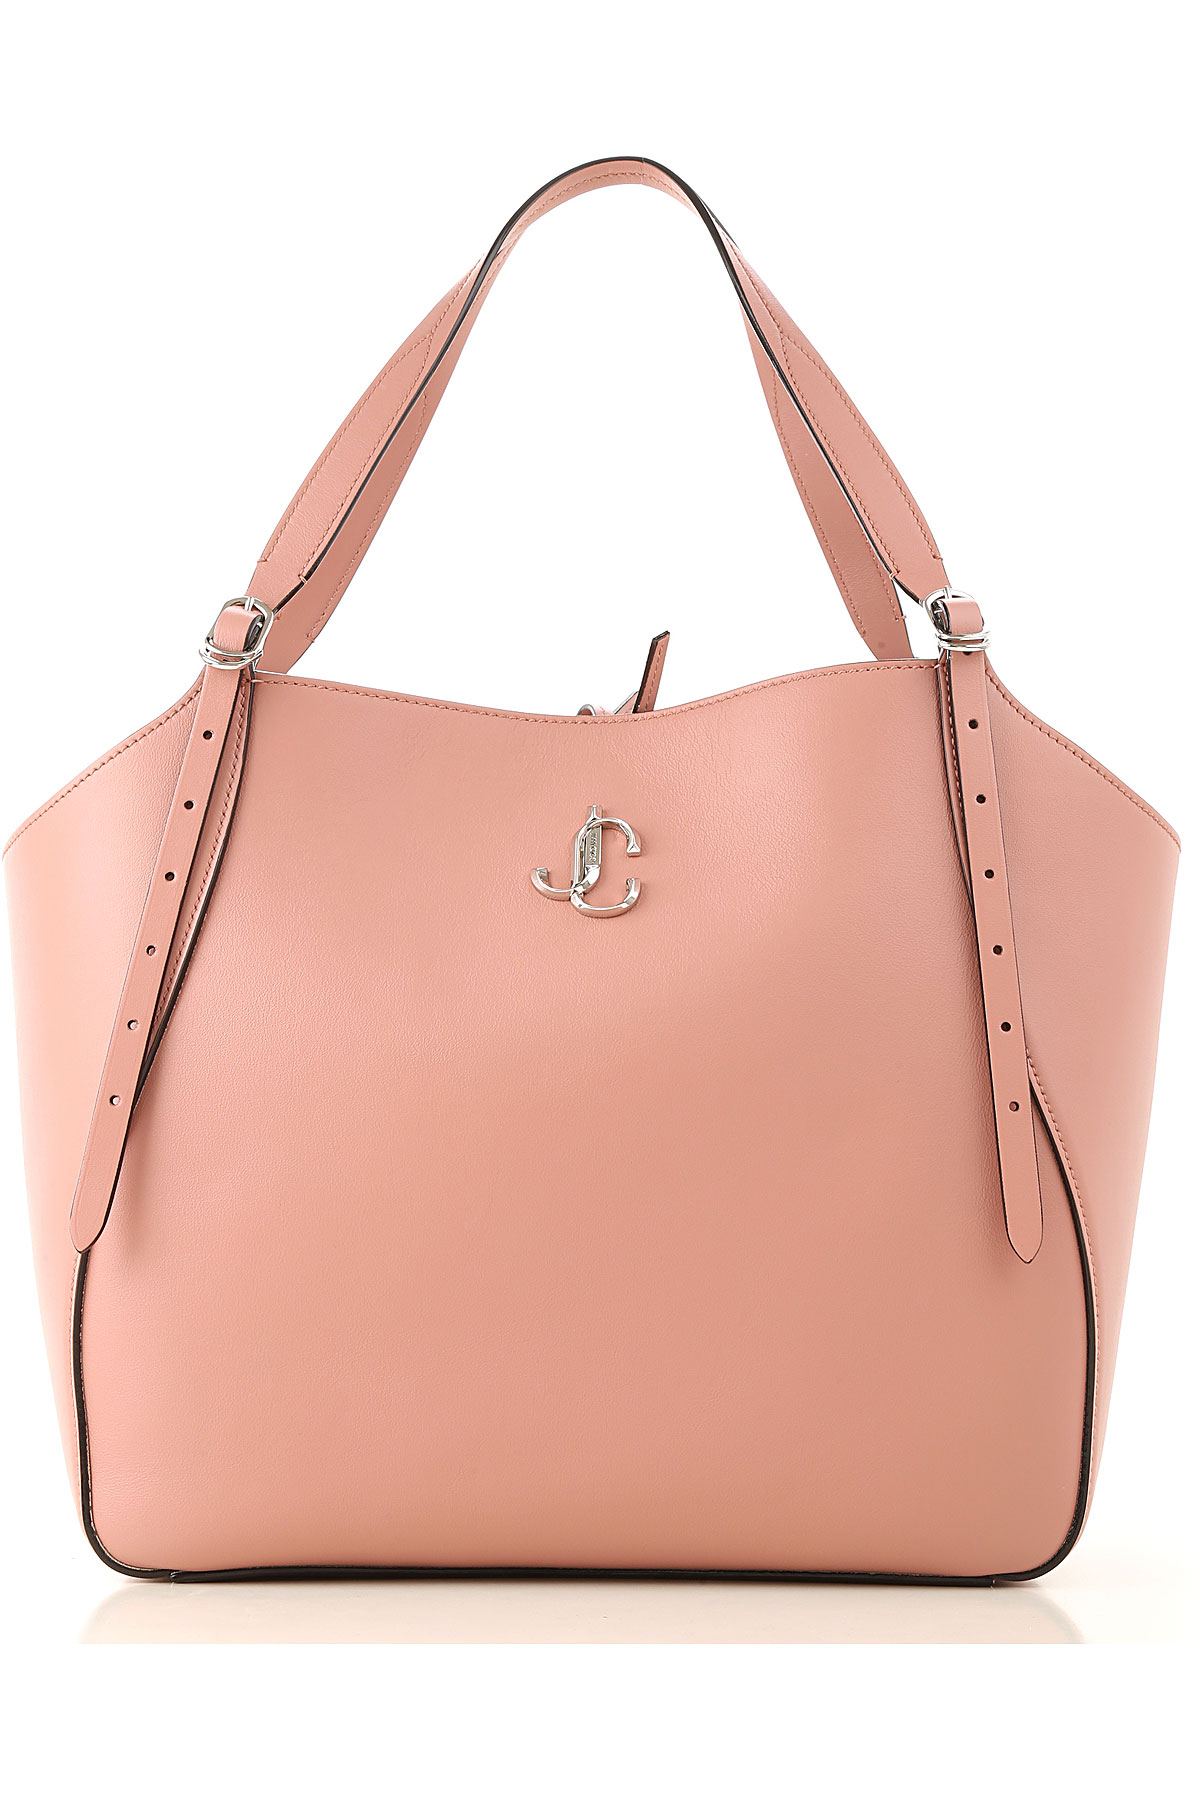 Handbags Jimmy Choo, Style code: varenne-tote-clf